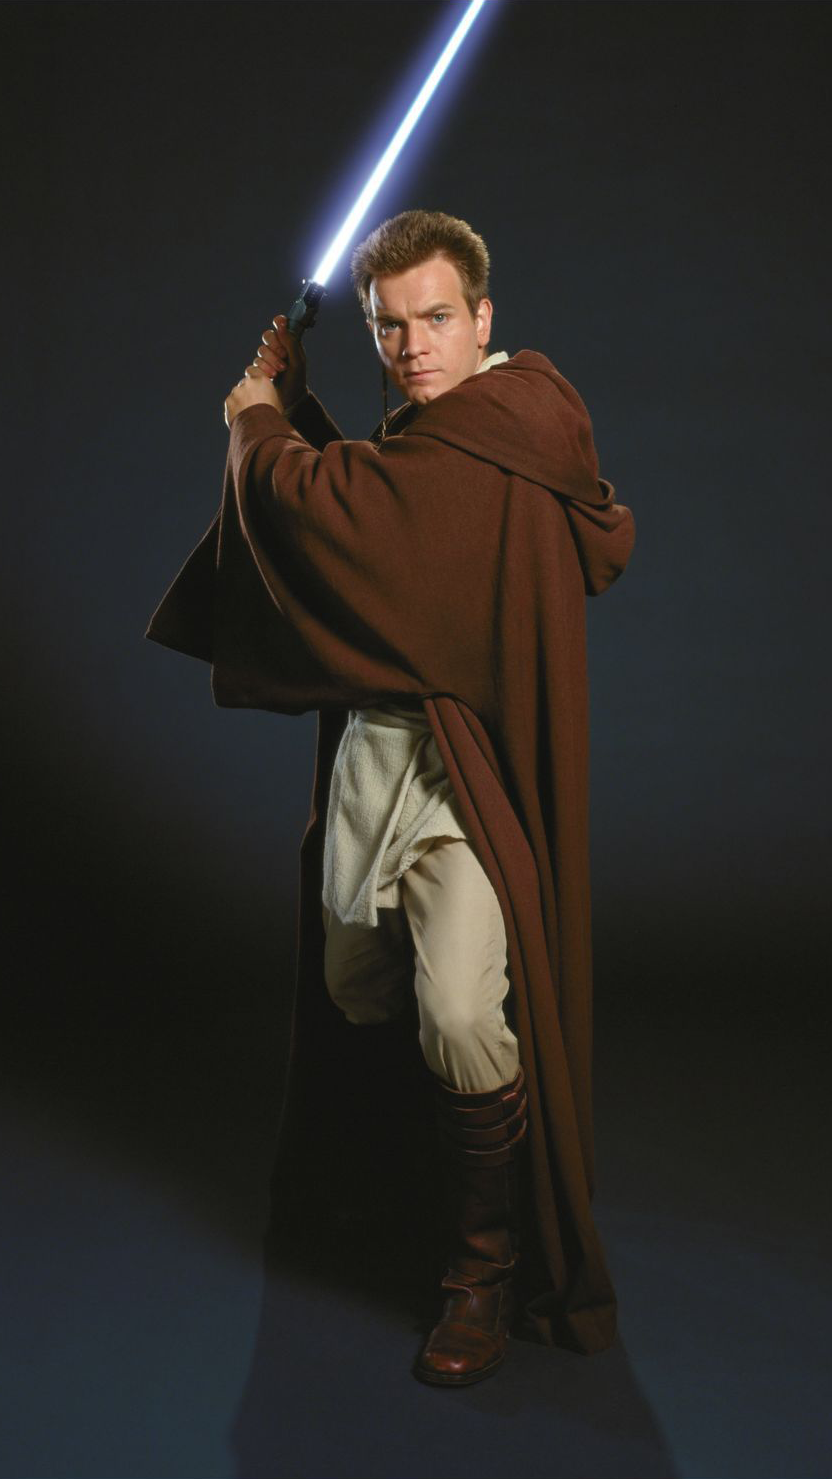 Obi-Wan Kenobi (TV series) - Wikiwand